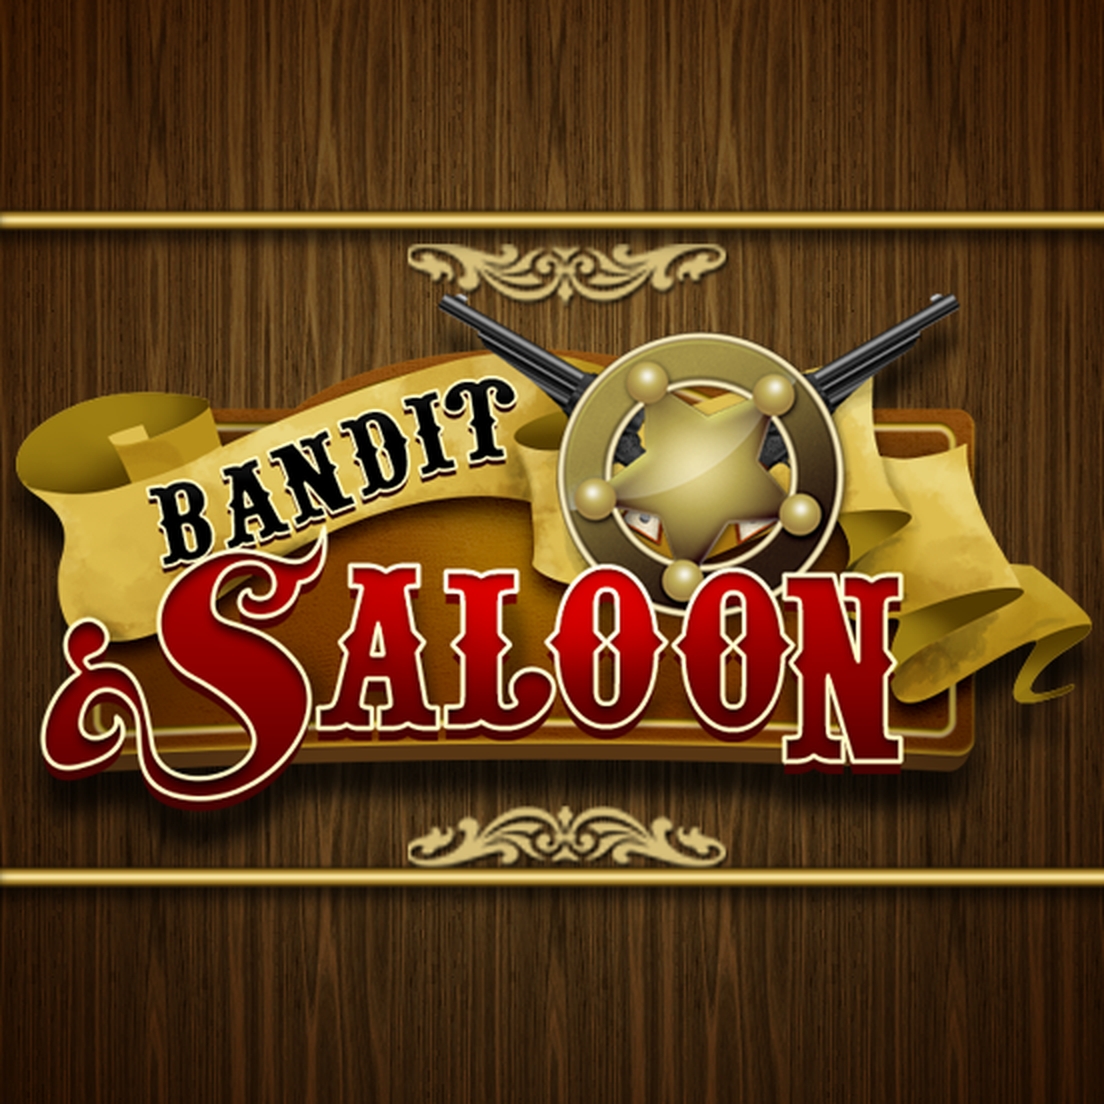 Bandit Saloon